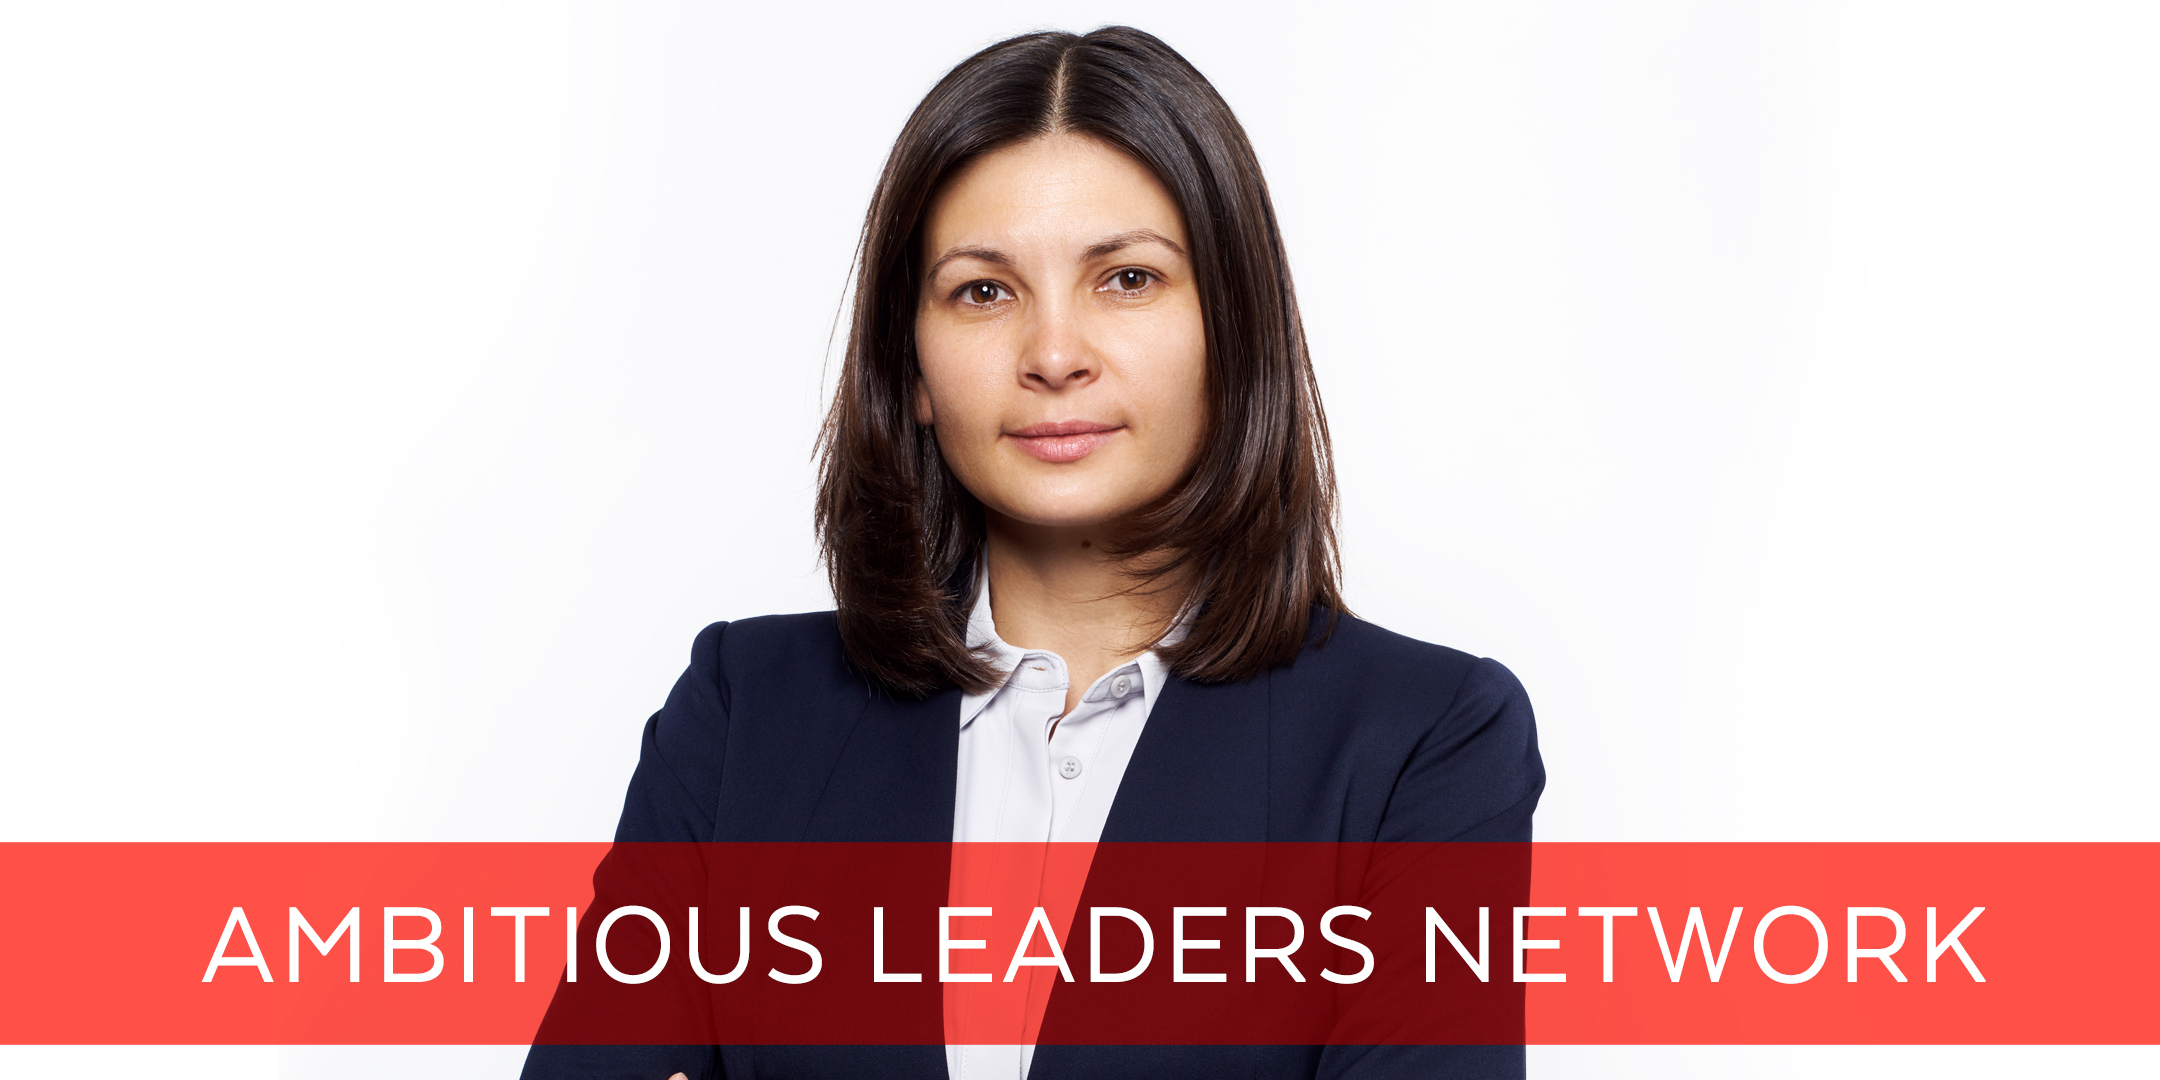 Ambitious Leaders Network - Olga Abdrashitova